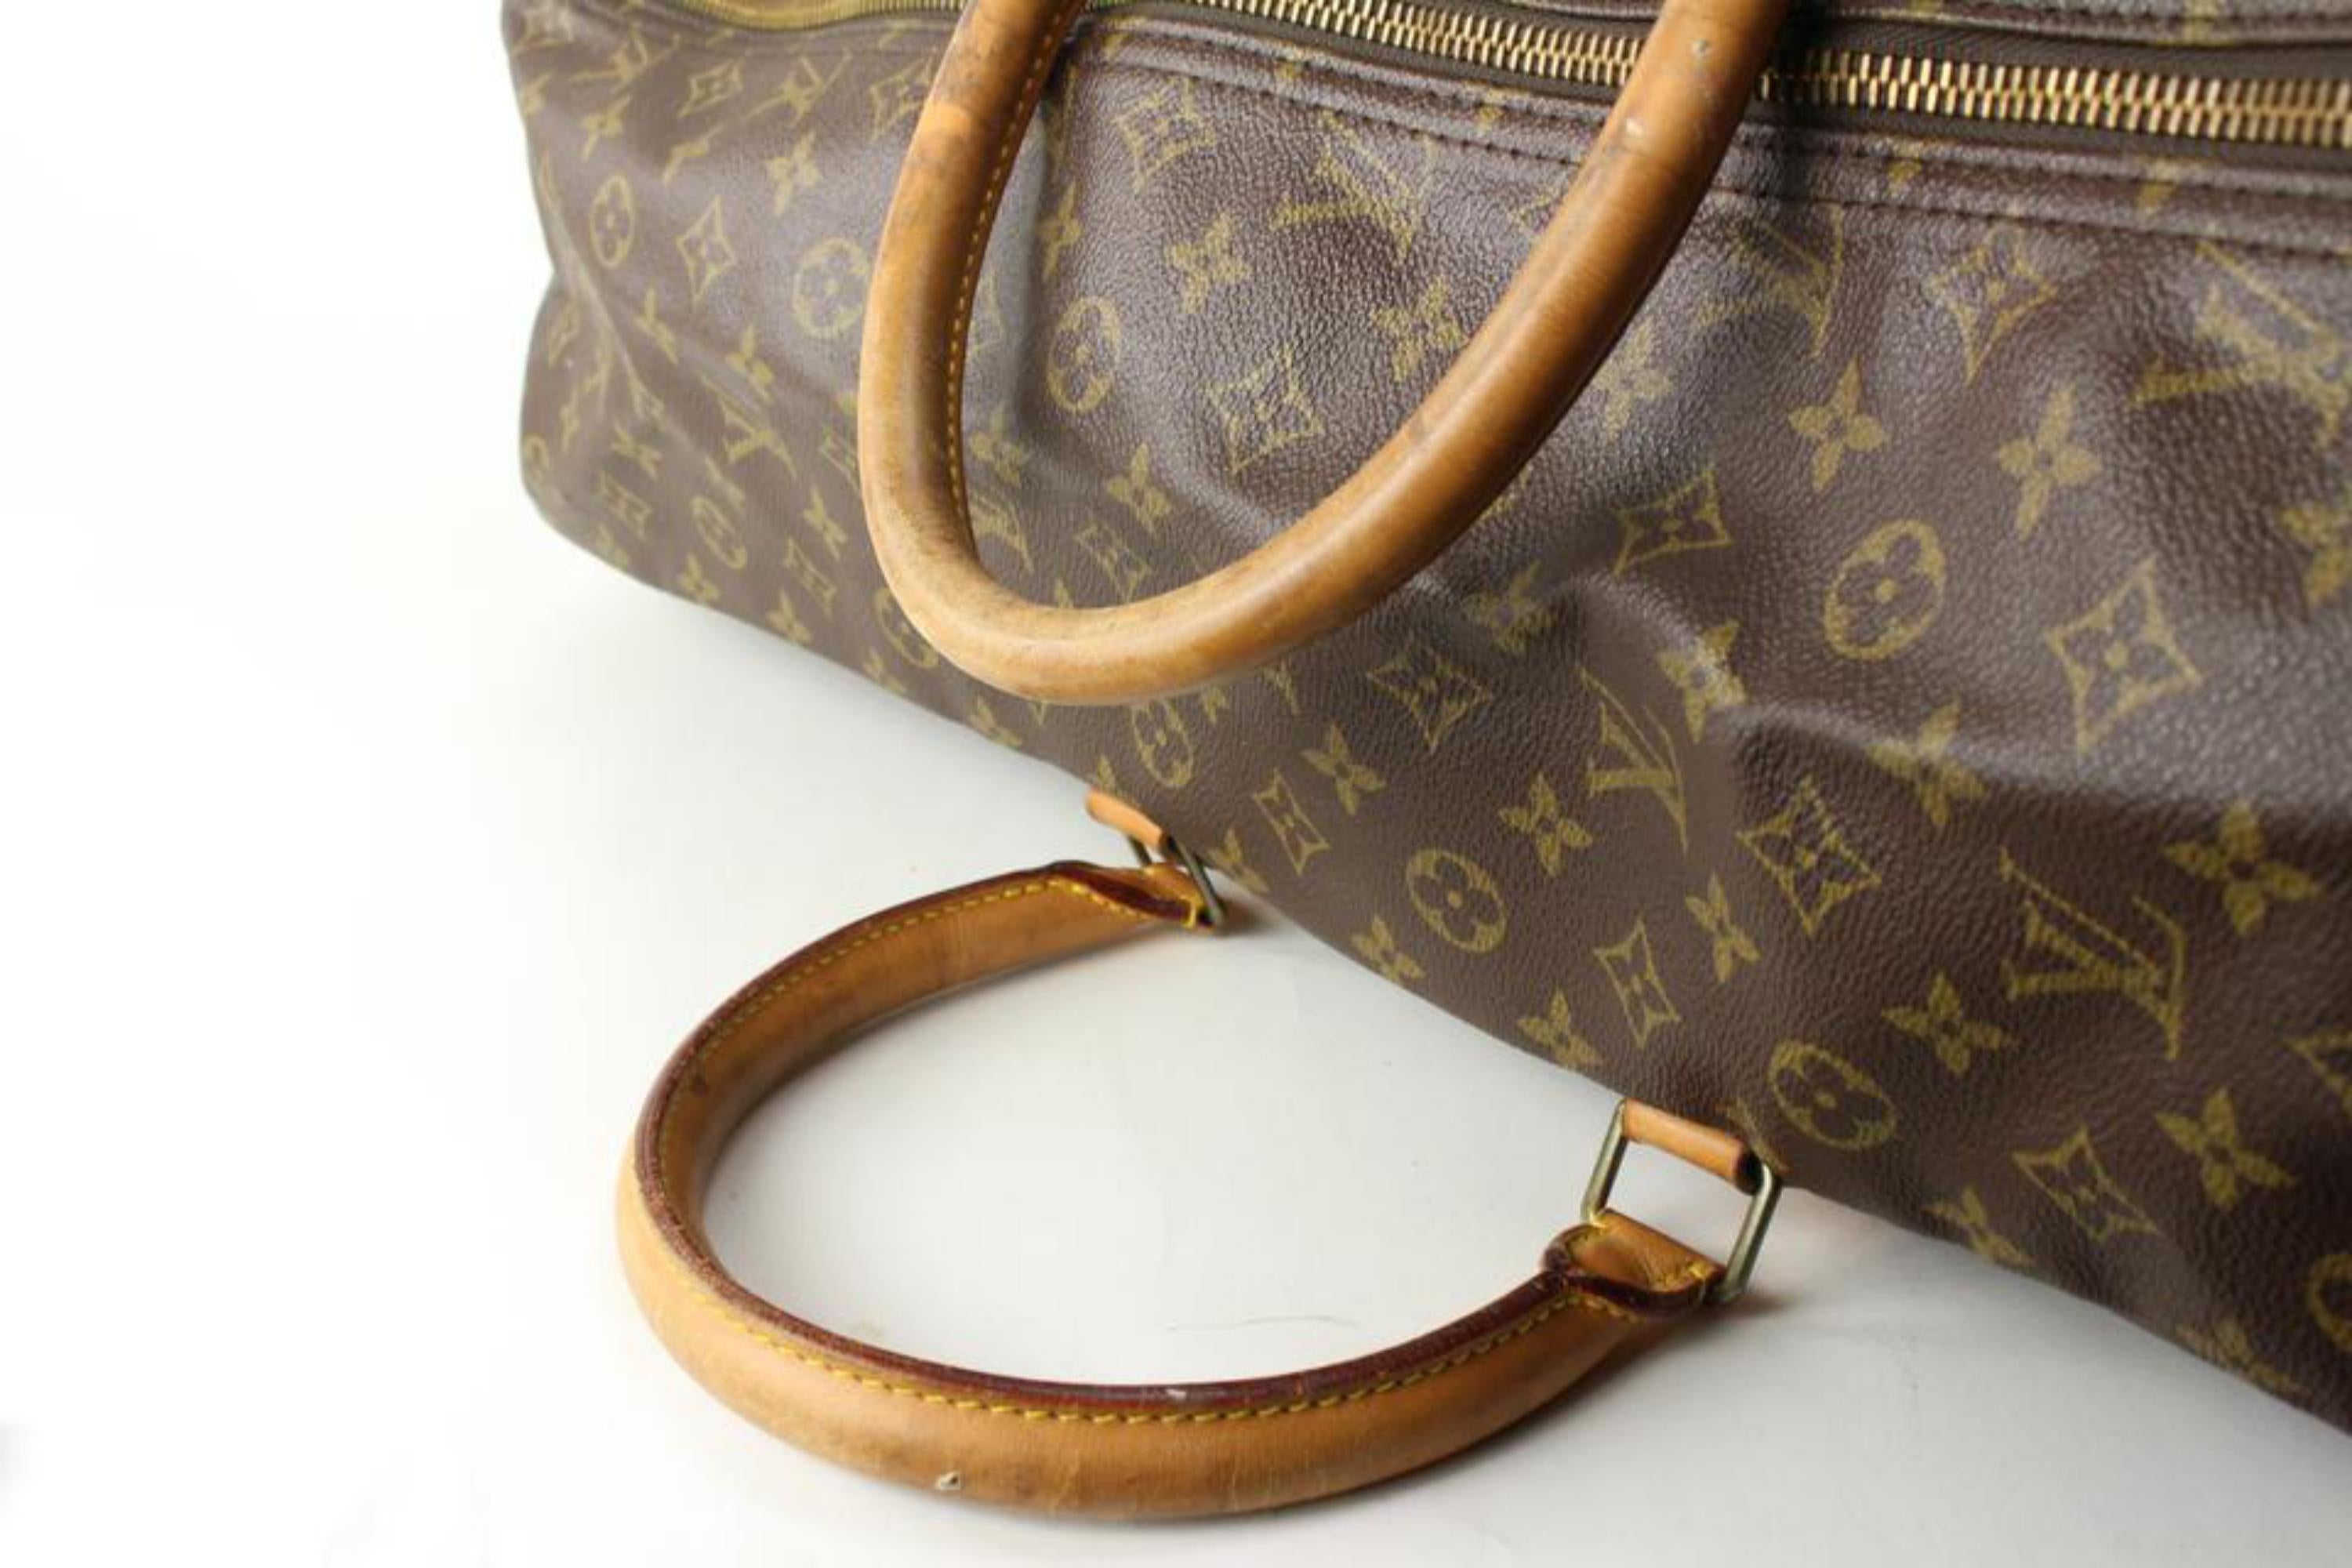 Louis Vuitton, Bags, Travel Speedy 6 Lv